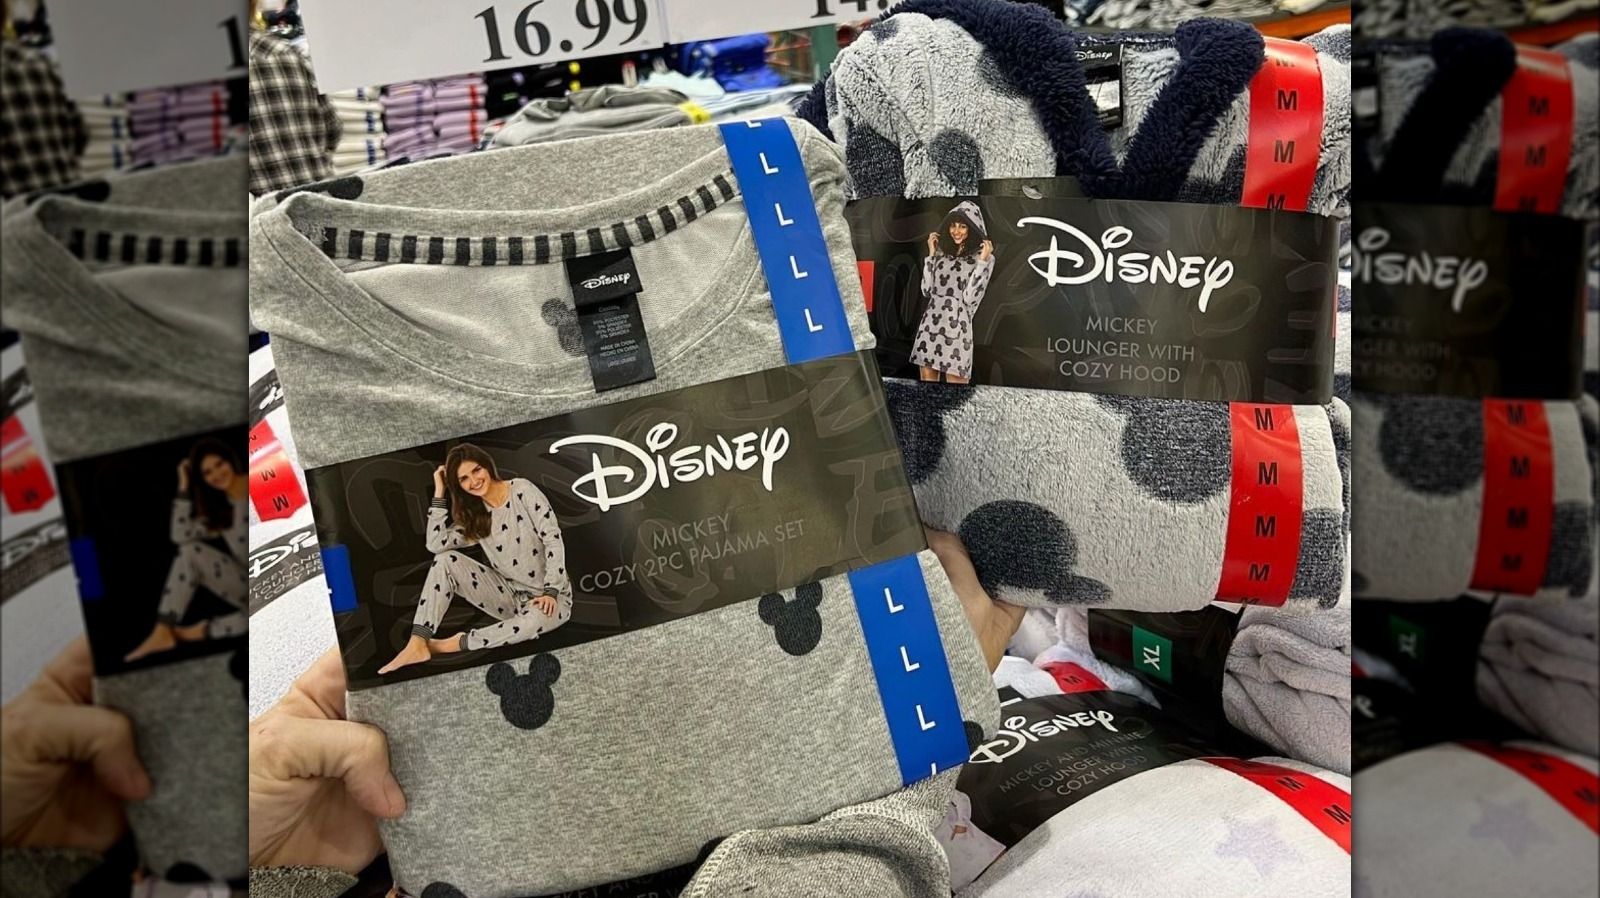 Costco Buys - These Disney 2pc pajama sets look SO cozy